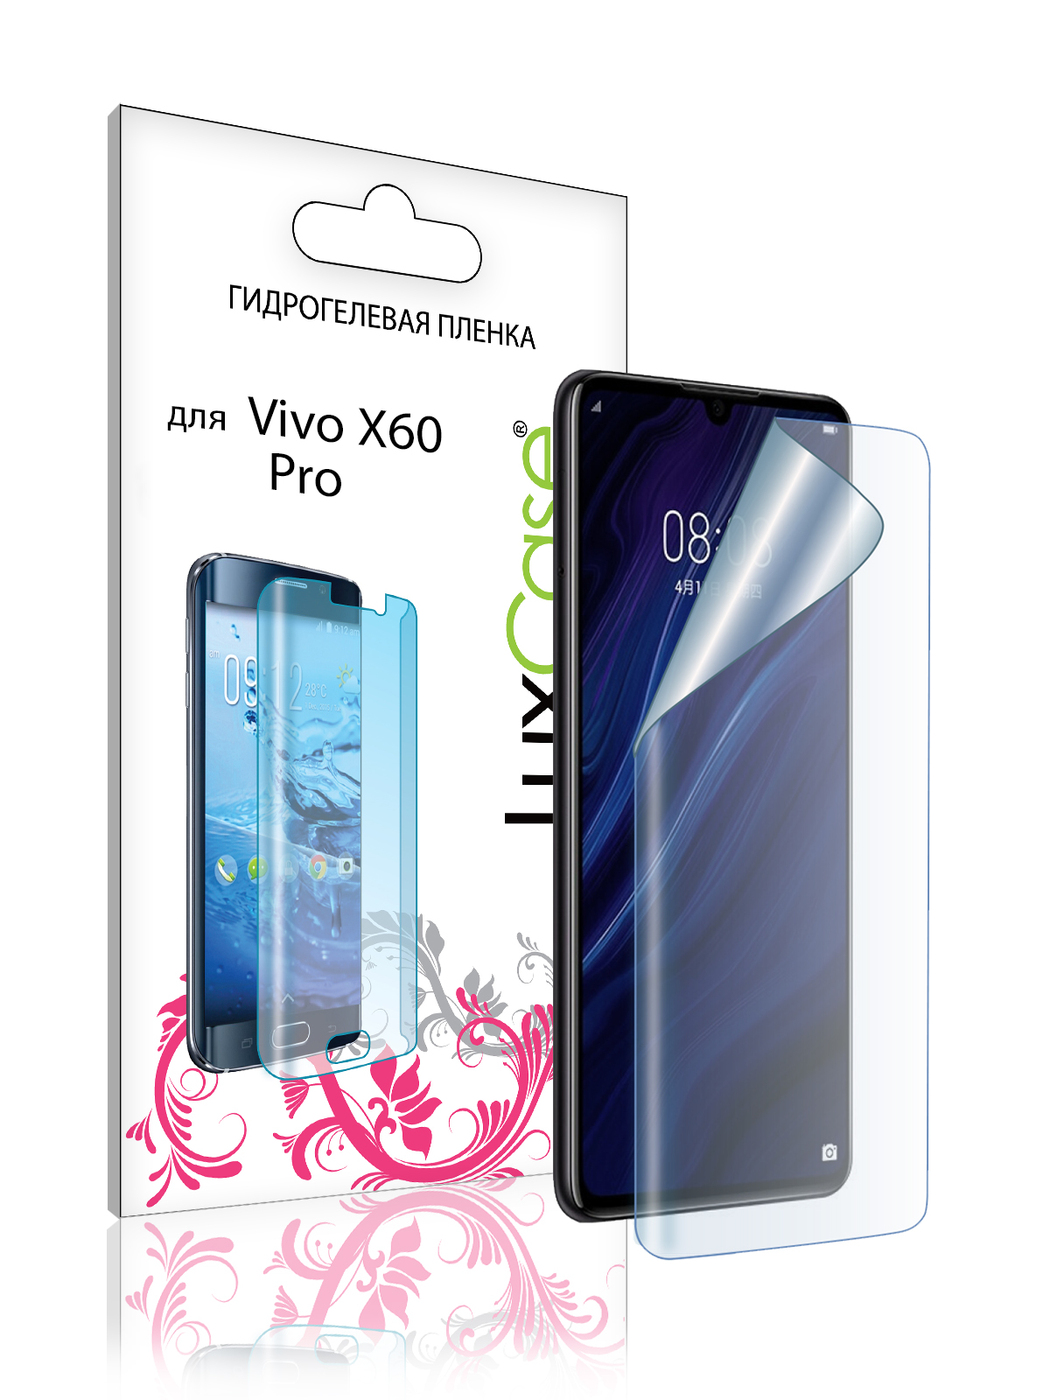 Пленка гидрогелевая LuxCase для Vivo X60 Pro Front 0.14mm Transparent 86001 гидрогелевая пленка с вырезом под камеру для виво у76с vivo y76s